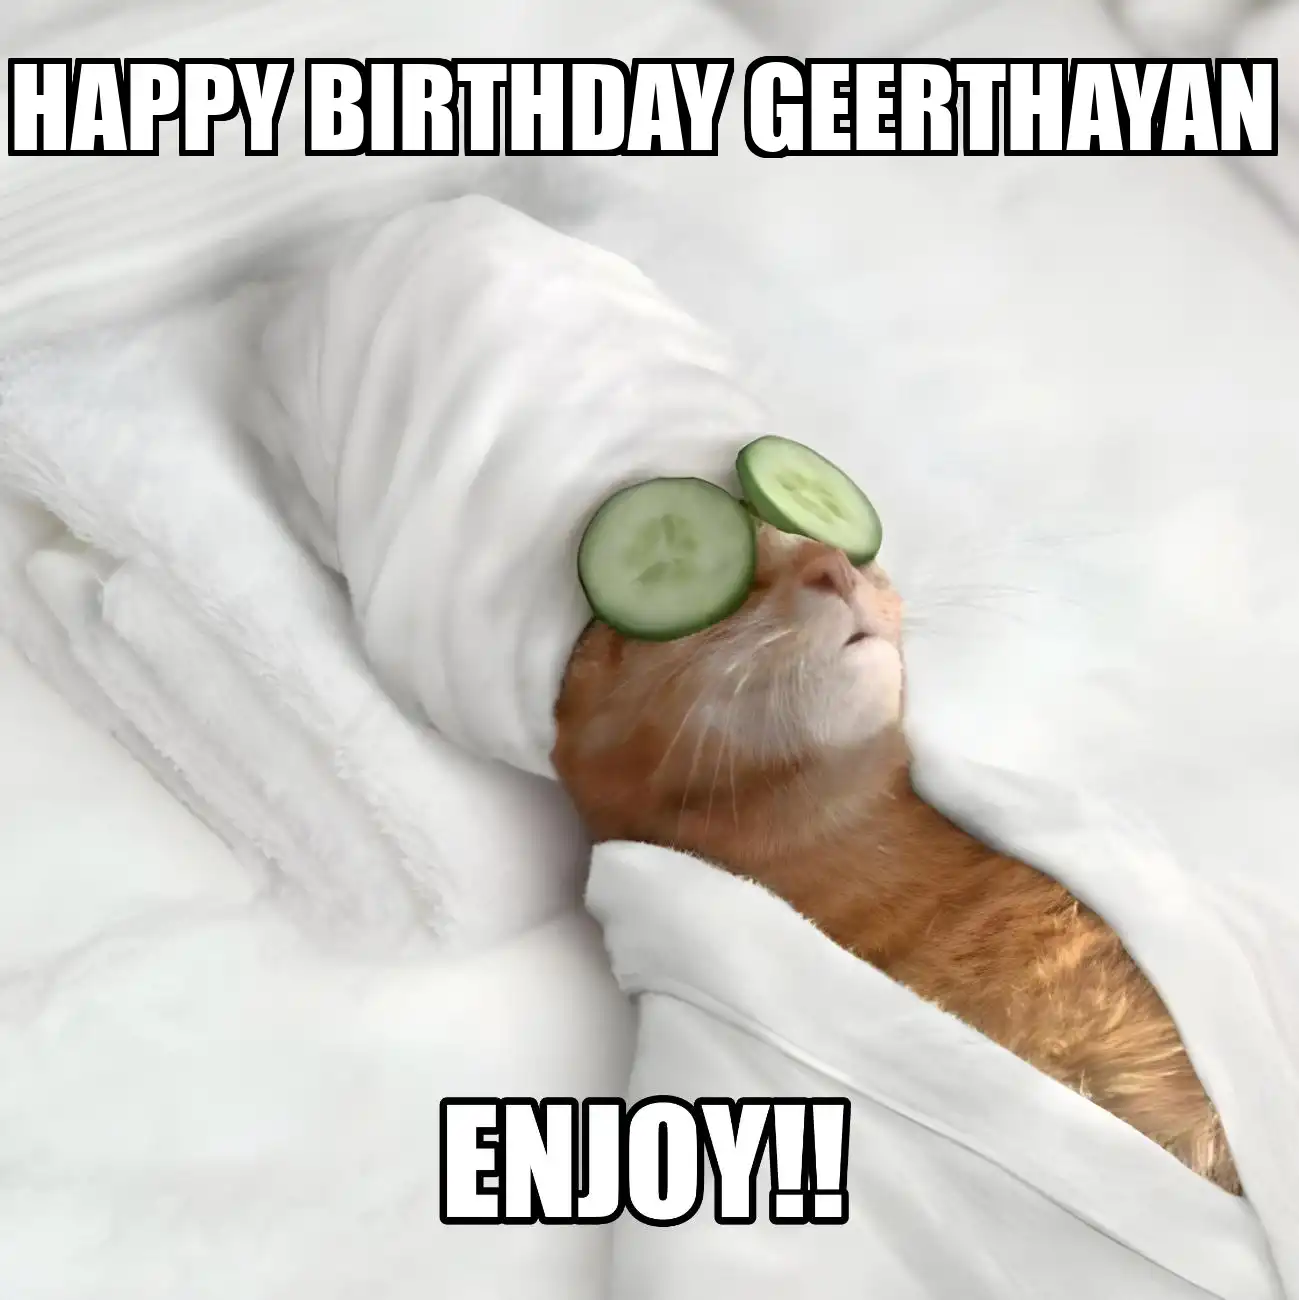 Happy Birthday Geerthayan Enjoy Cat Meme